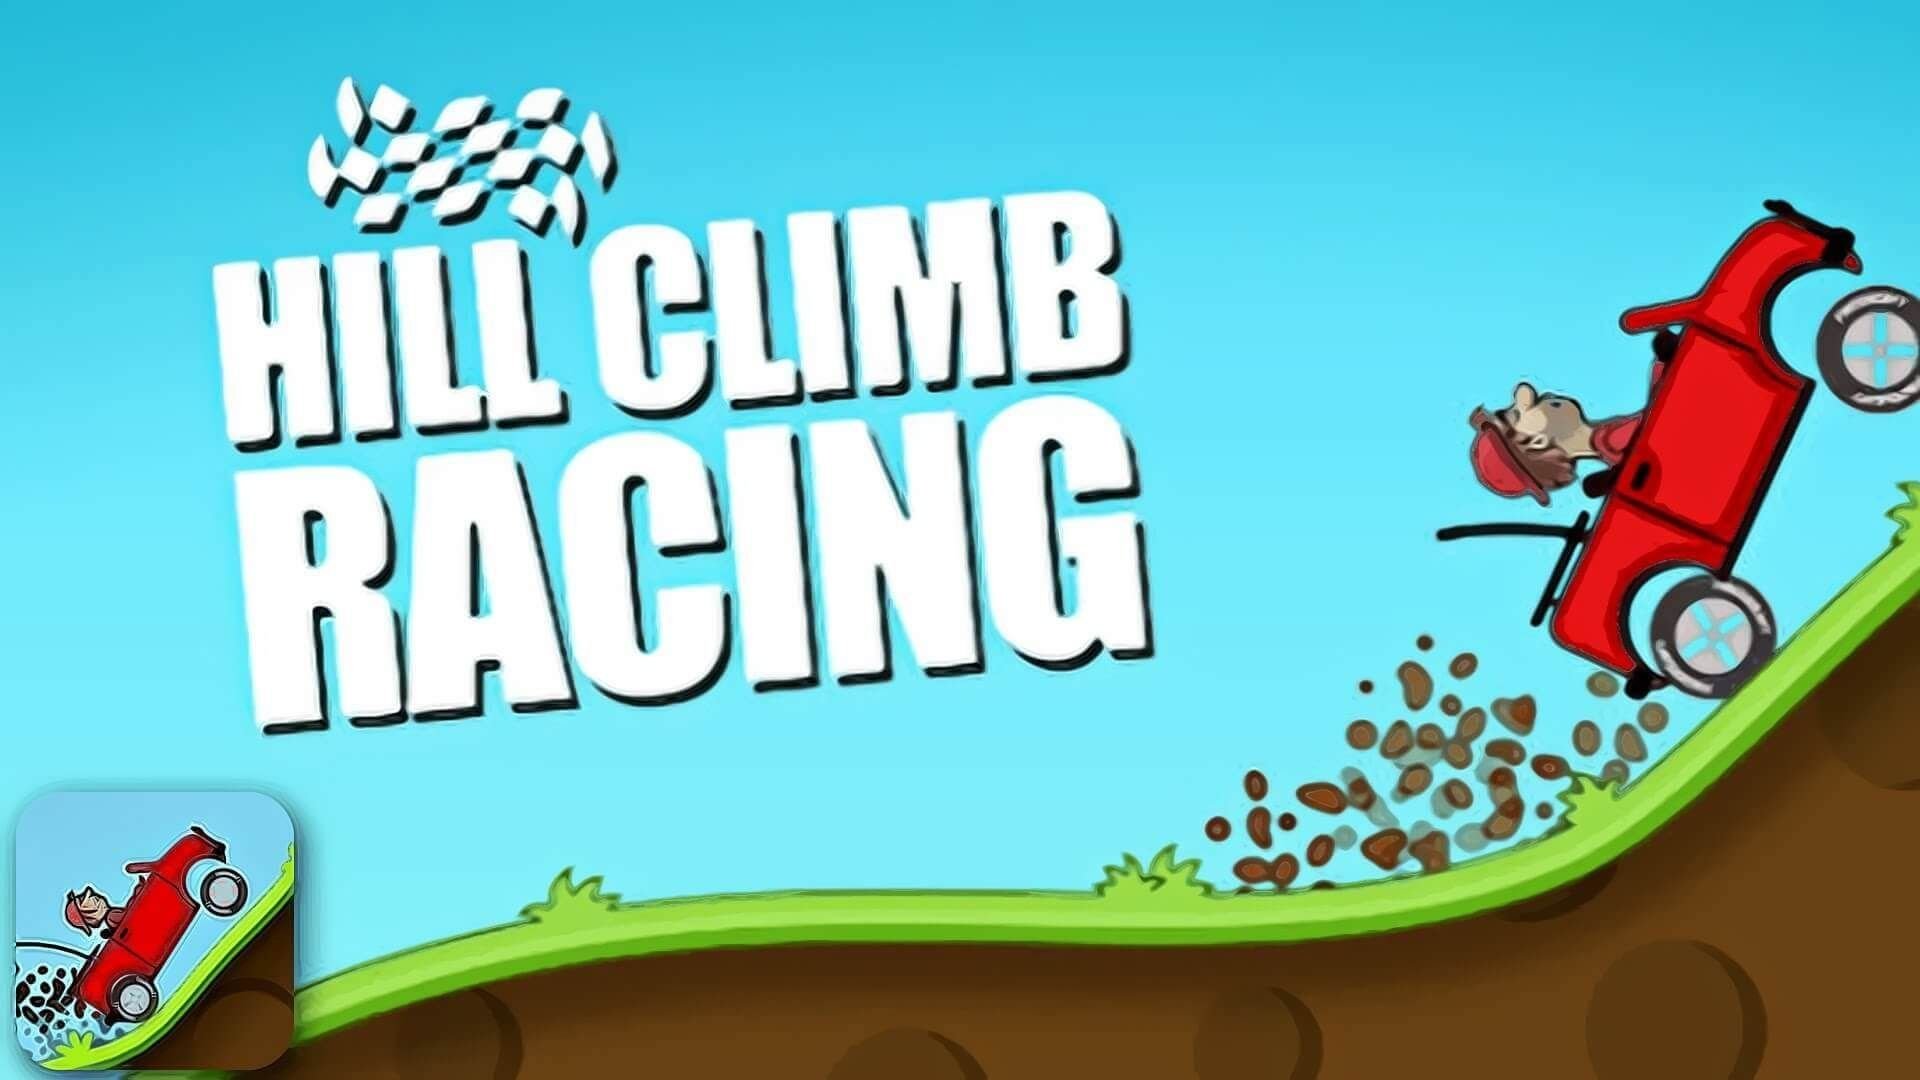 Hill climb racing 2 версия 1.59 5. Игра Hill Climb Racing 1. Downhill Racer игра. Хилл Клаймб рейсинг. Значок игры Хилл климб рейсинг.